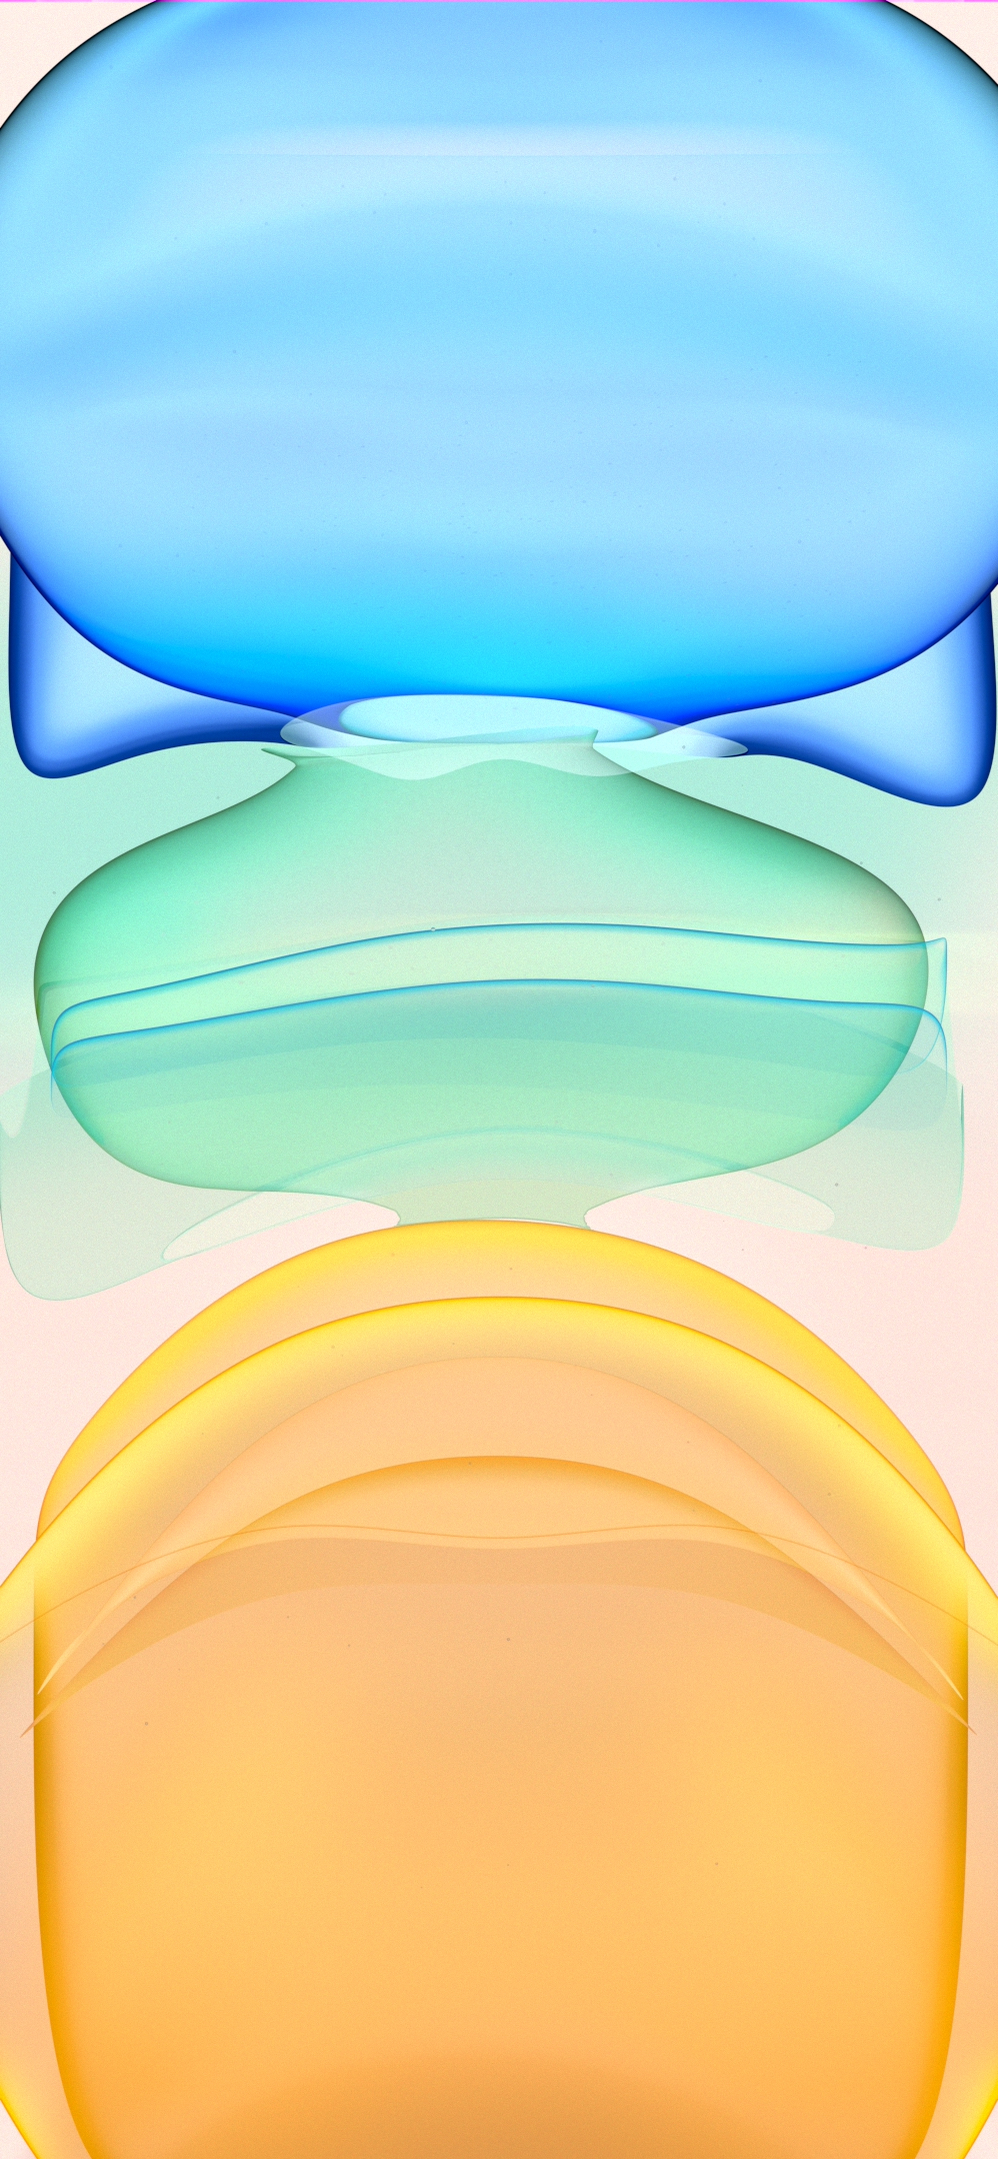 imágenes de fondo de pantalla,azul,agua,amarillo,turquesa,clipart